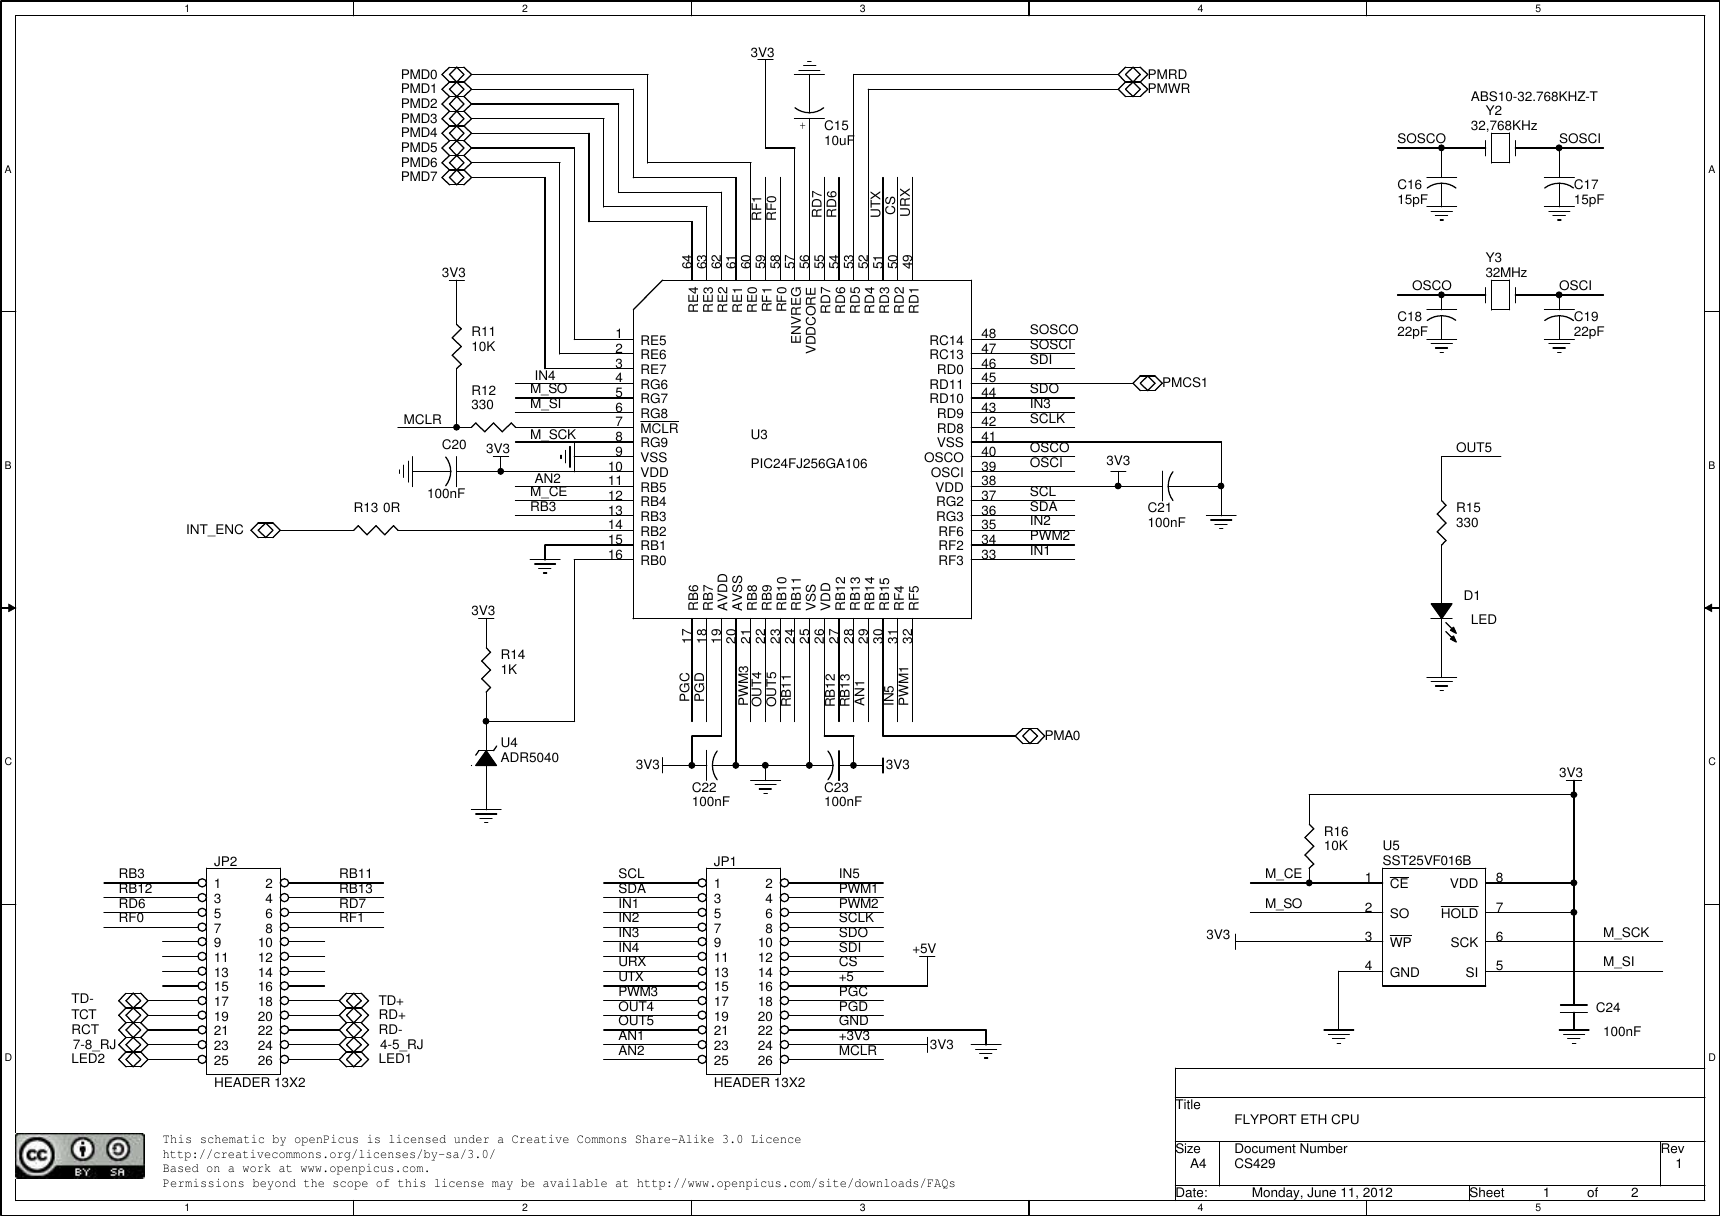 Page 1 of 2 - Flyport Eth R1 Ethernet Schema